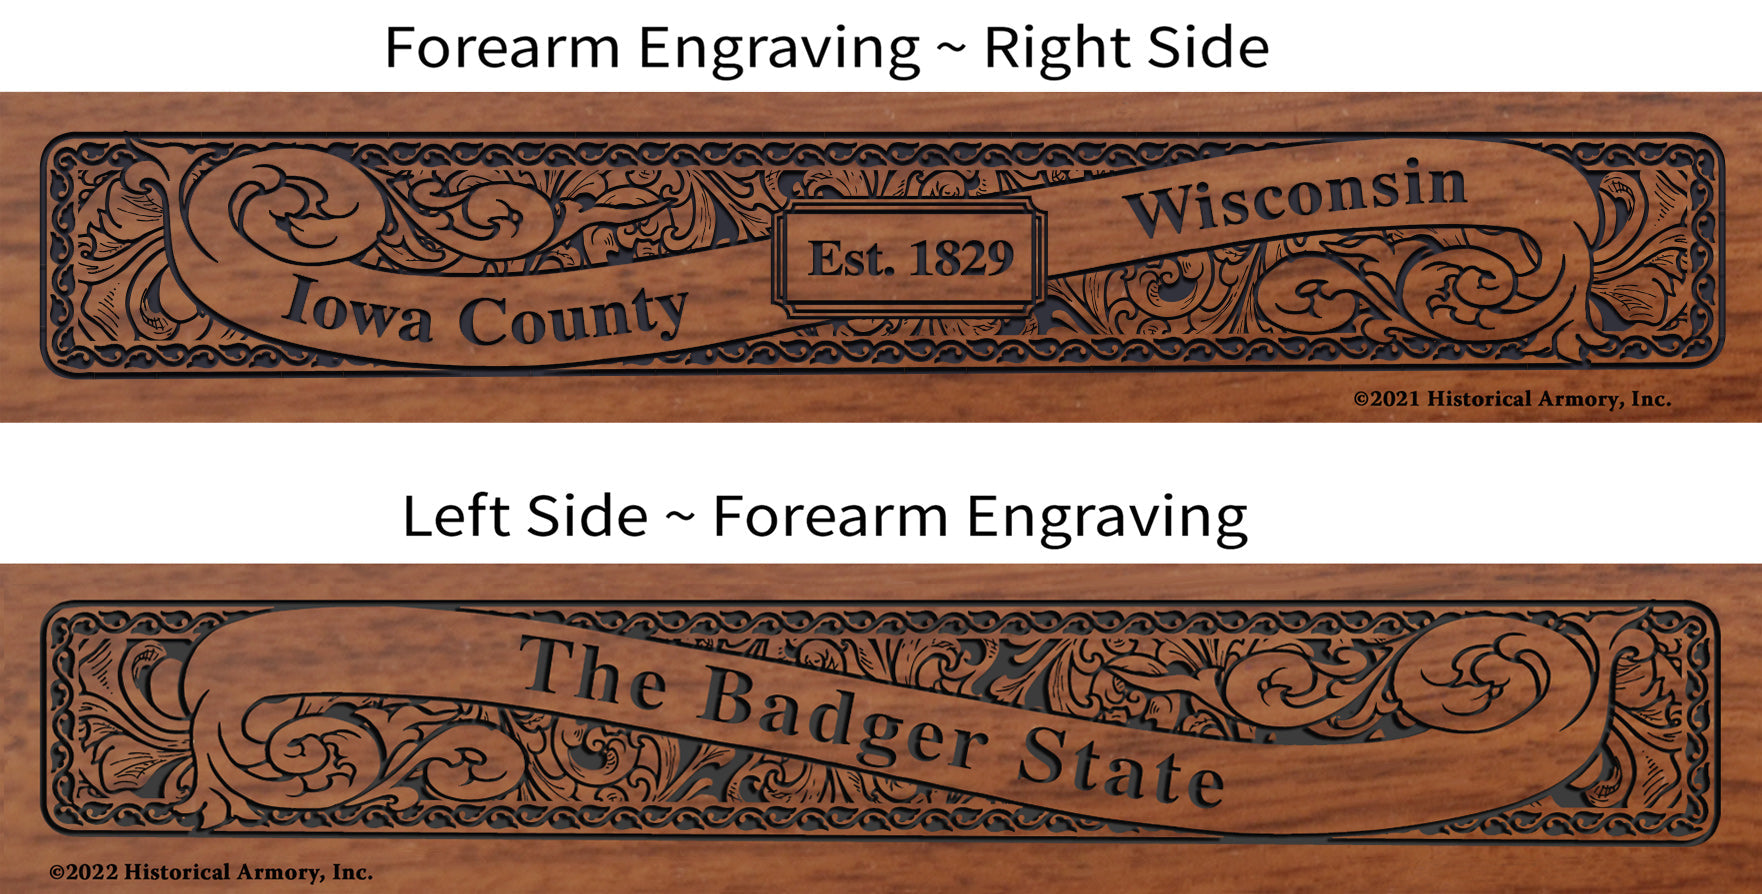 Iowa County Wisconsin Engraved Rifle Forearm